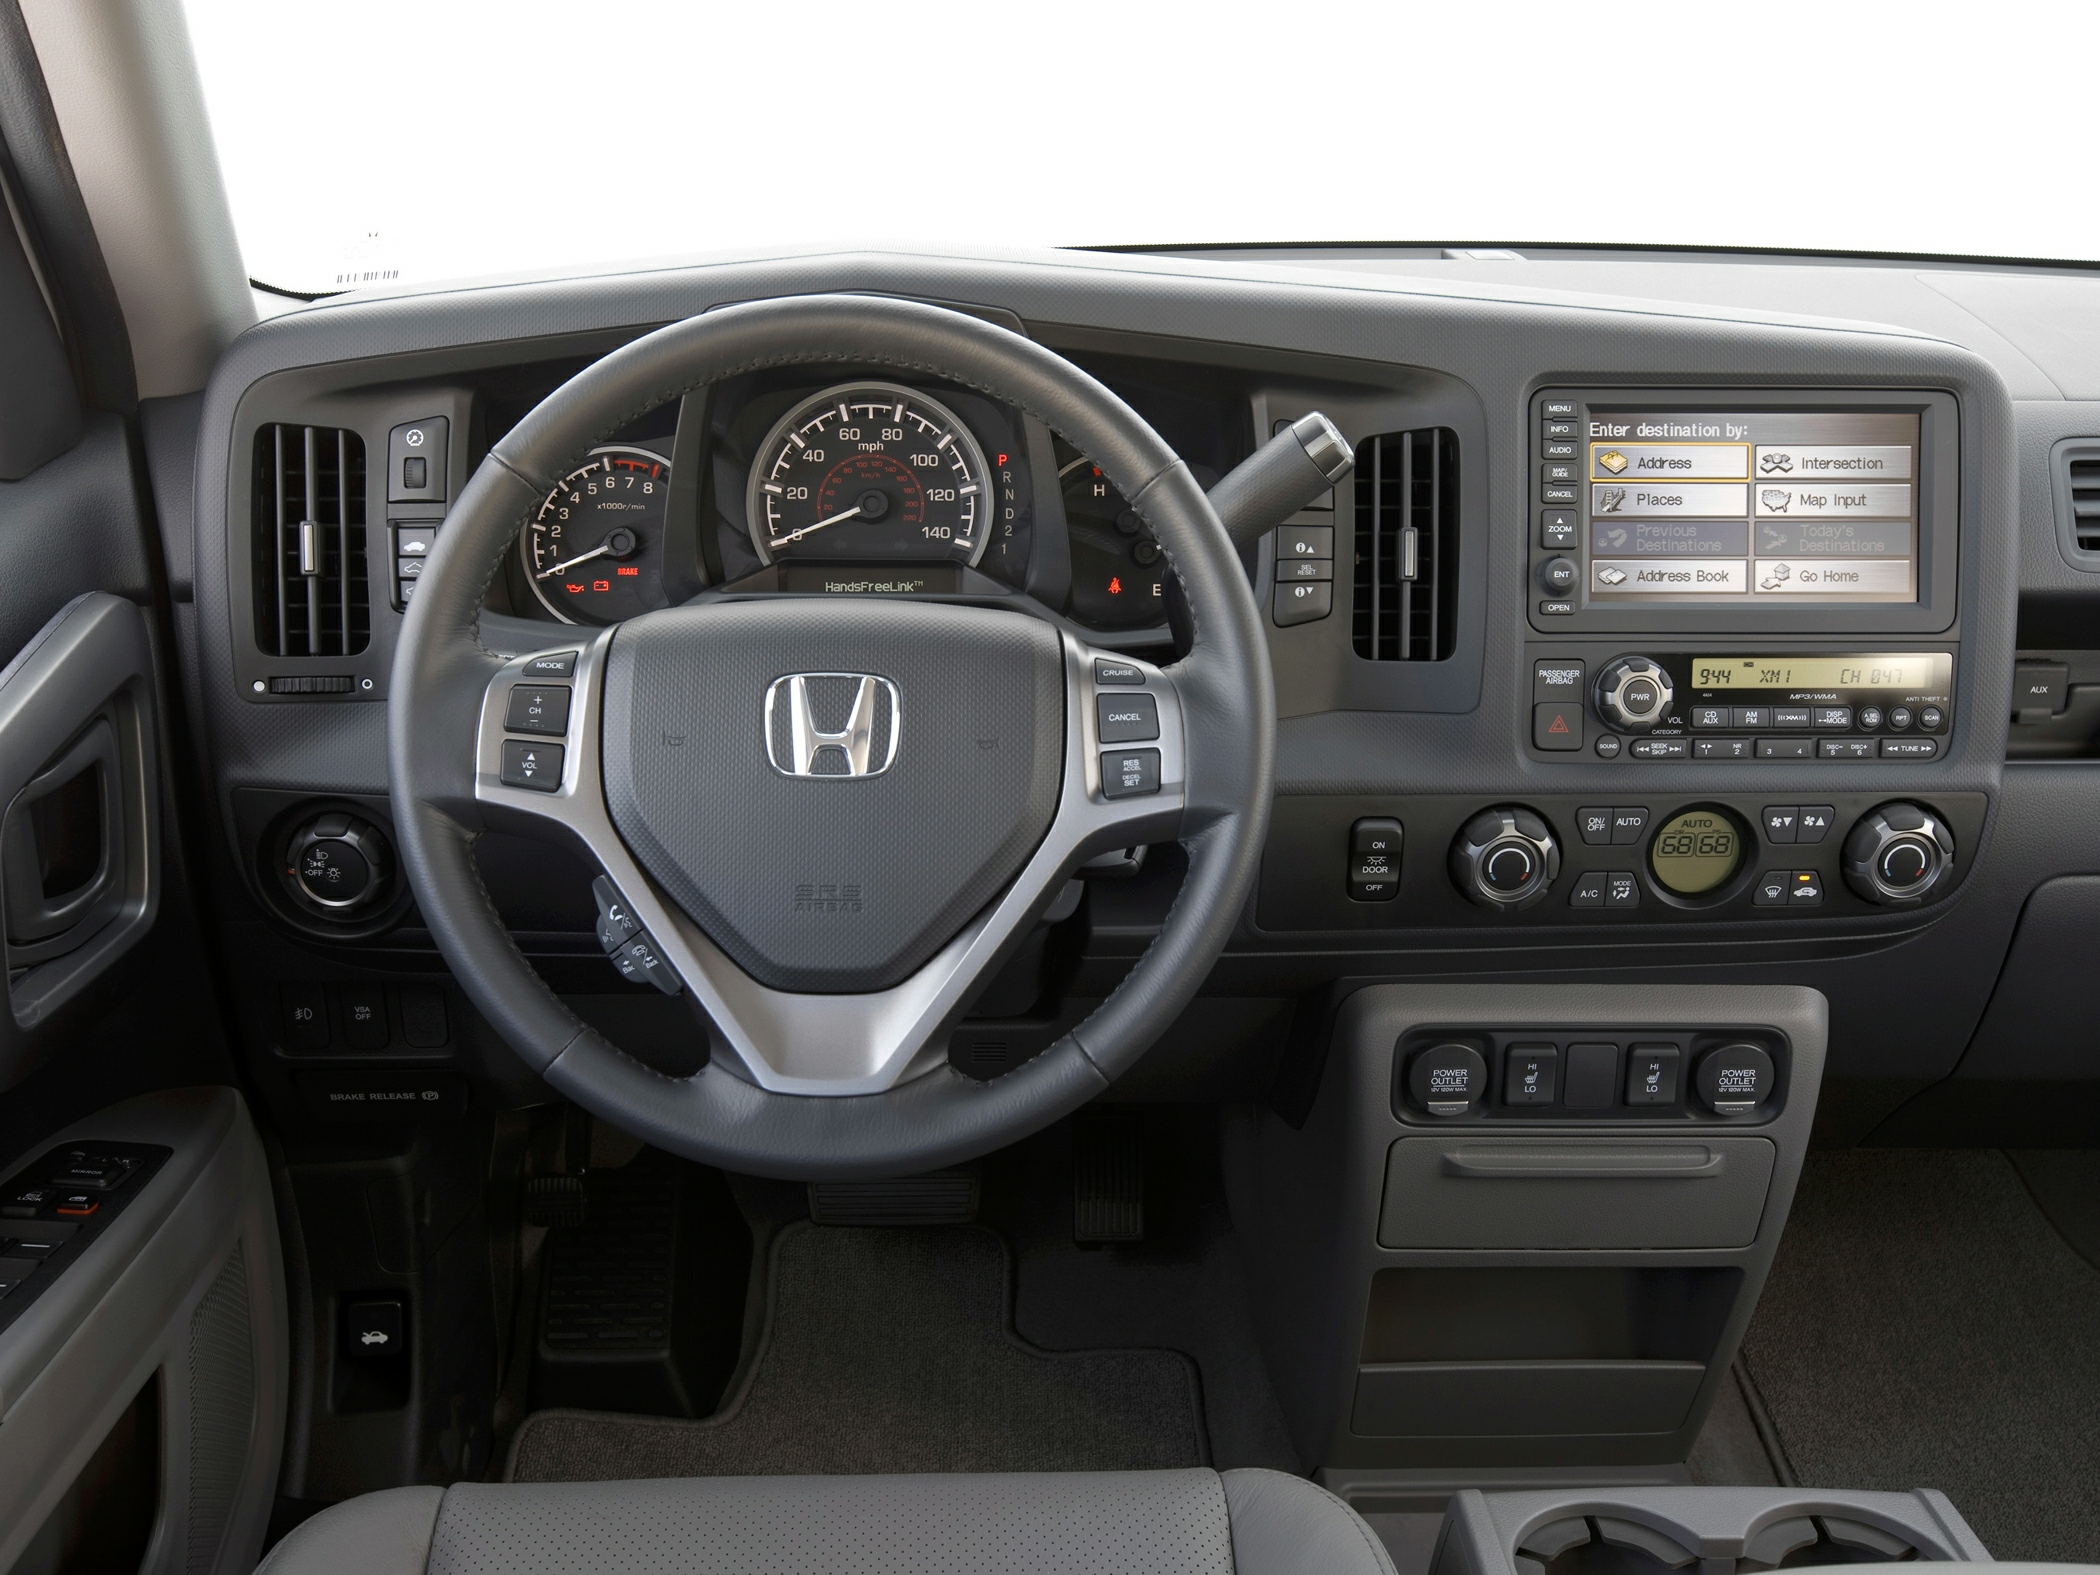 2009 Honda Ridgeline